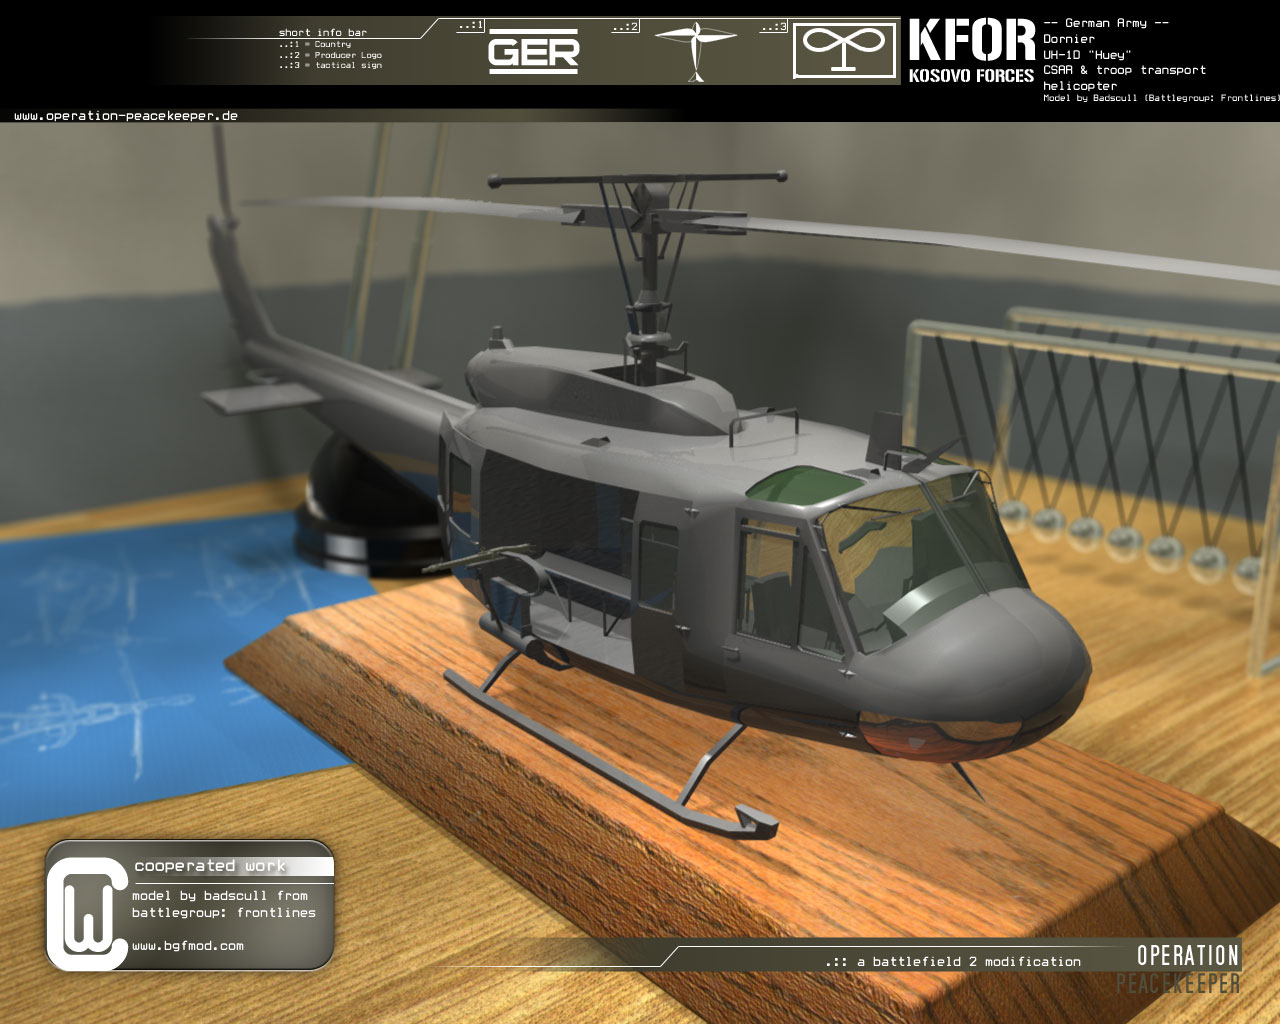 Dornier UH-1D